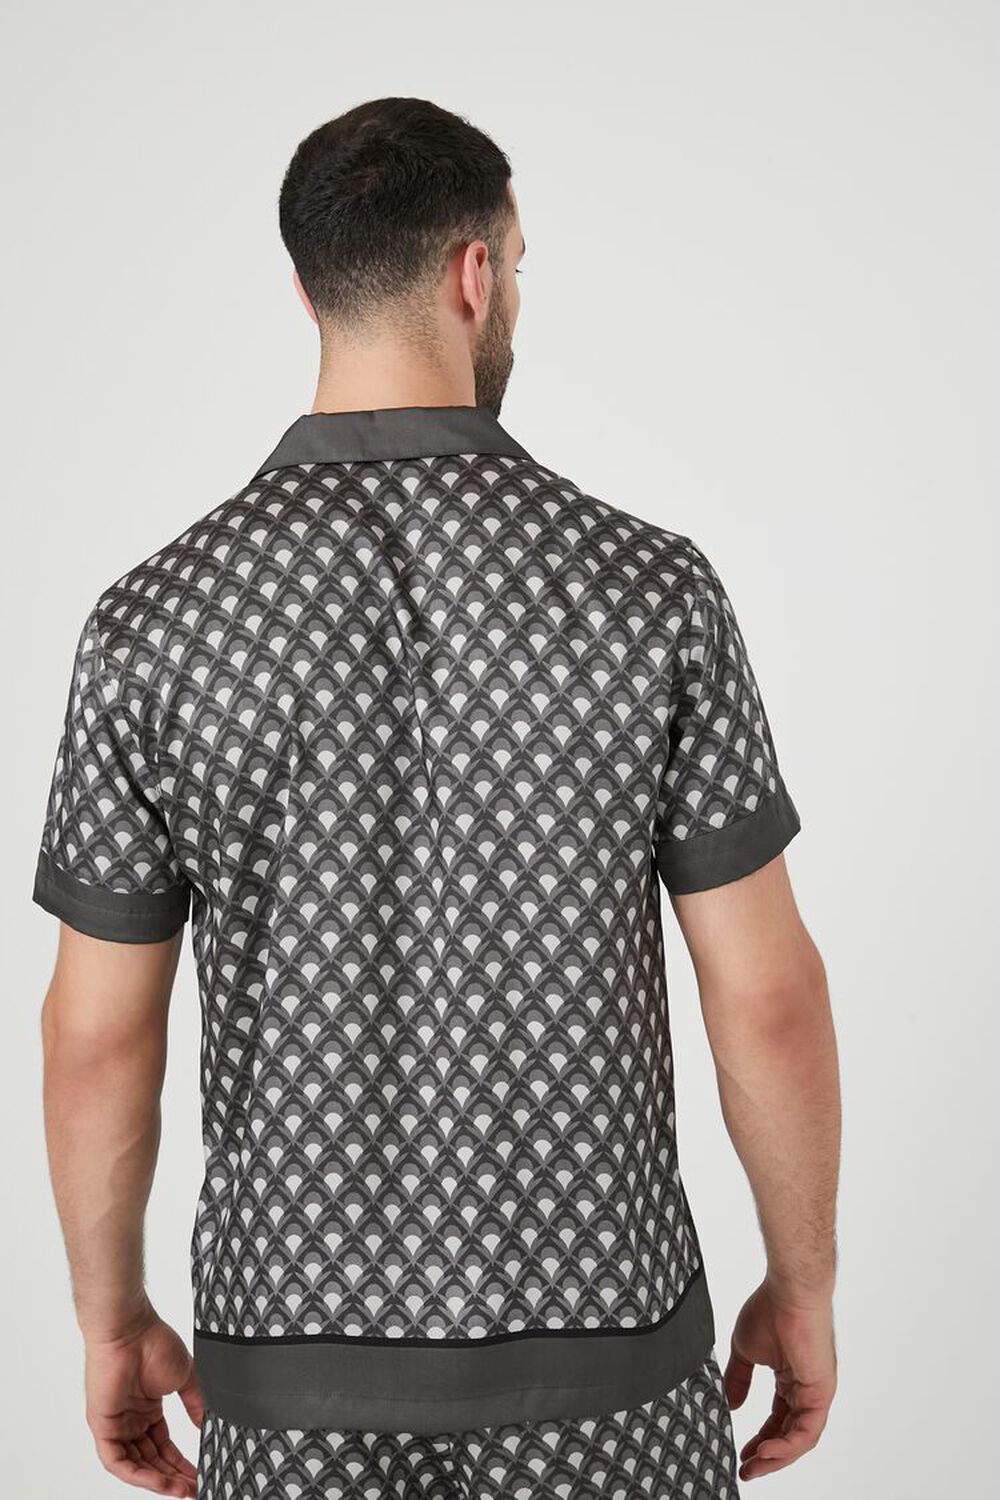 Louis Vuitton Monogram Technical Printed Half-Zip Long-sleeved Top, Black, Xs